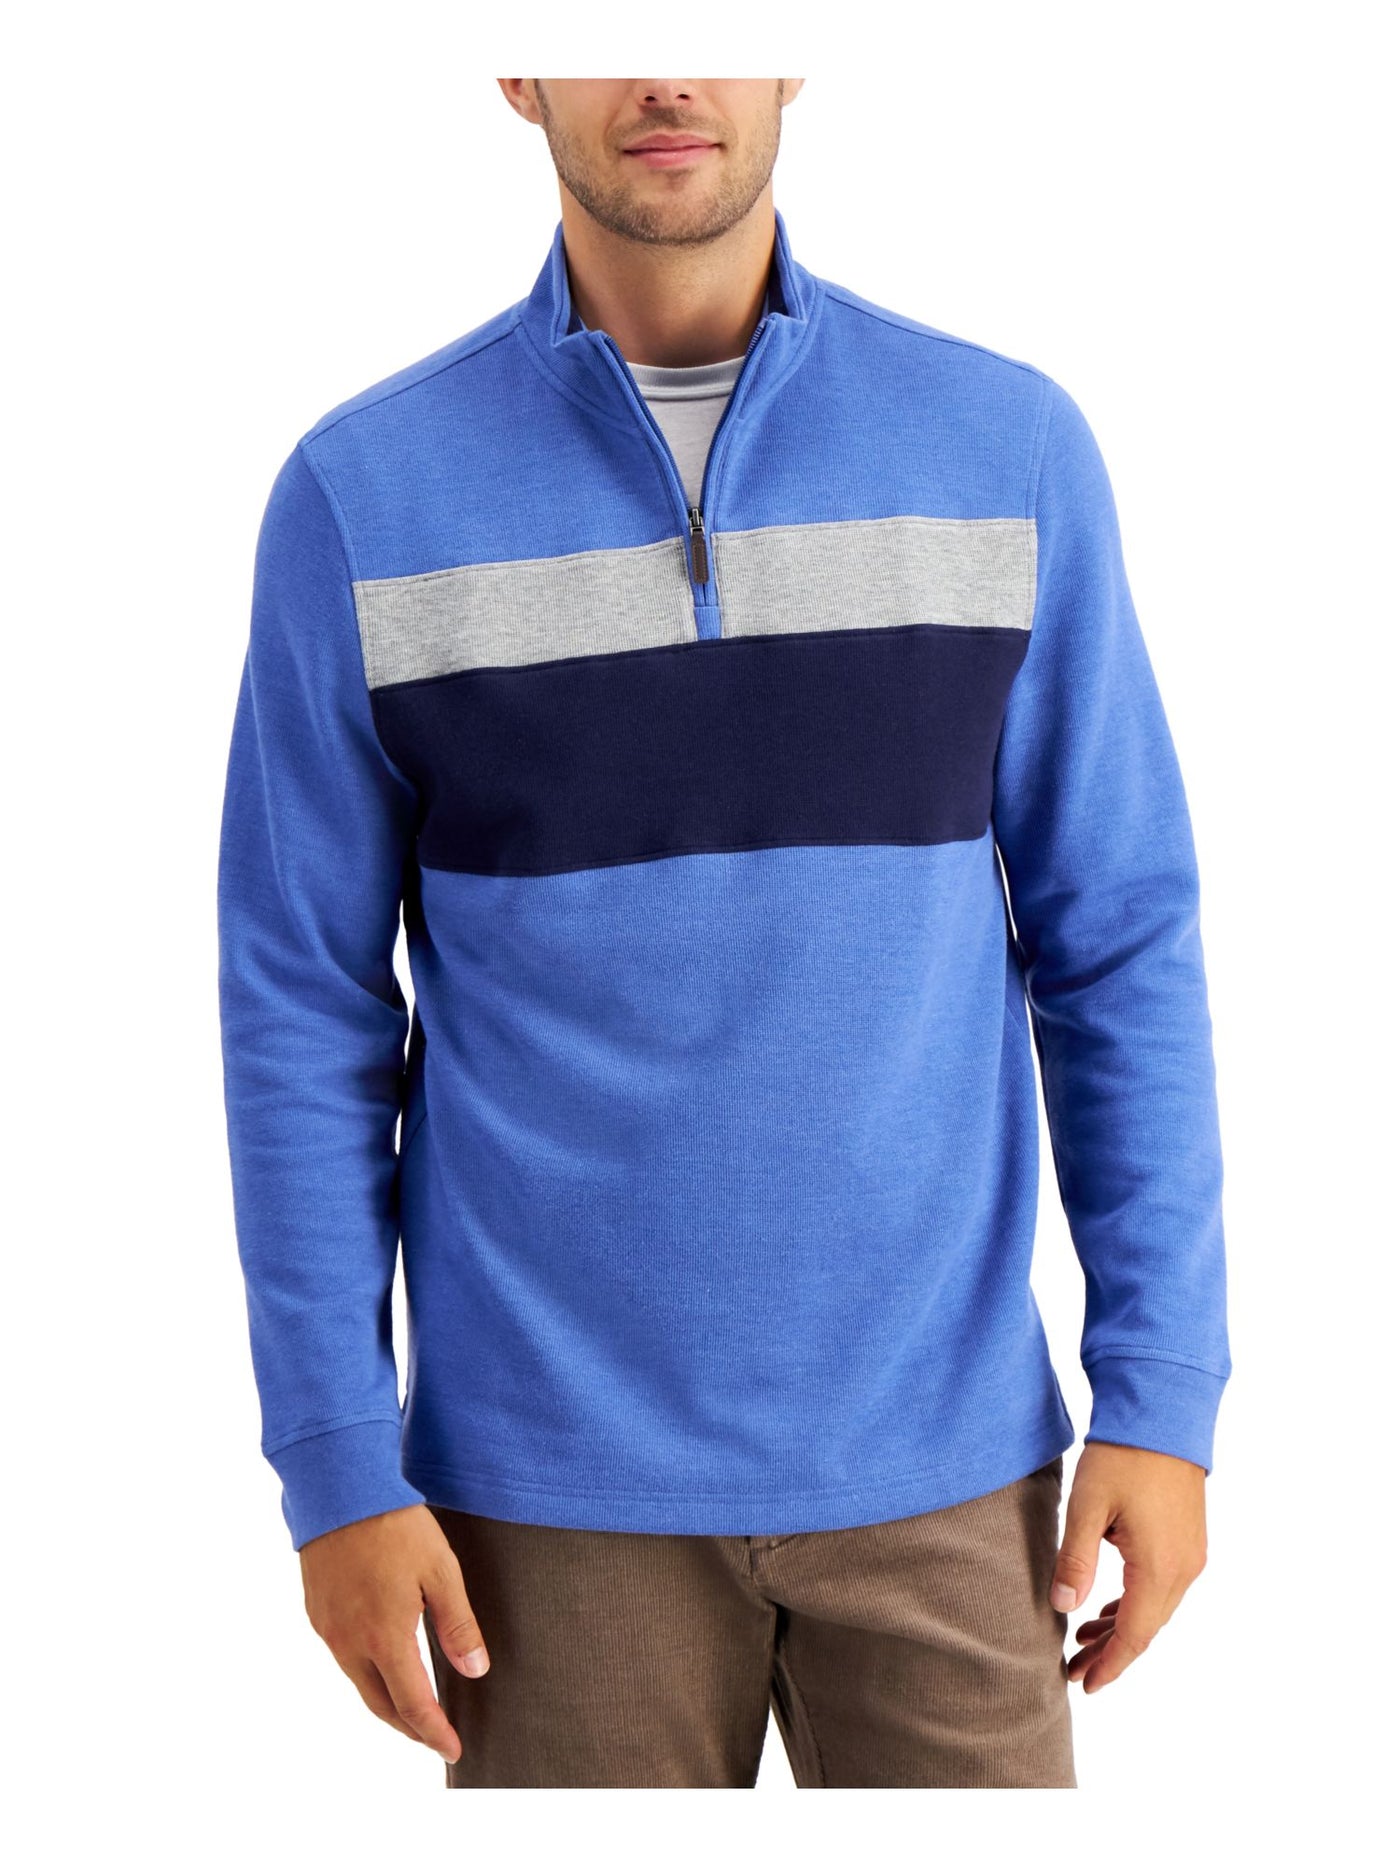 CLUBROOM Mens Blue Color Block Mock Classic Fit Quarter-Zip Cotton Blend Pullover Sweater S